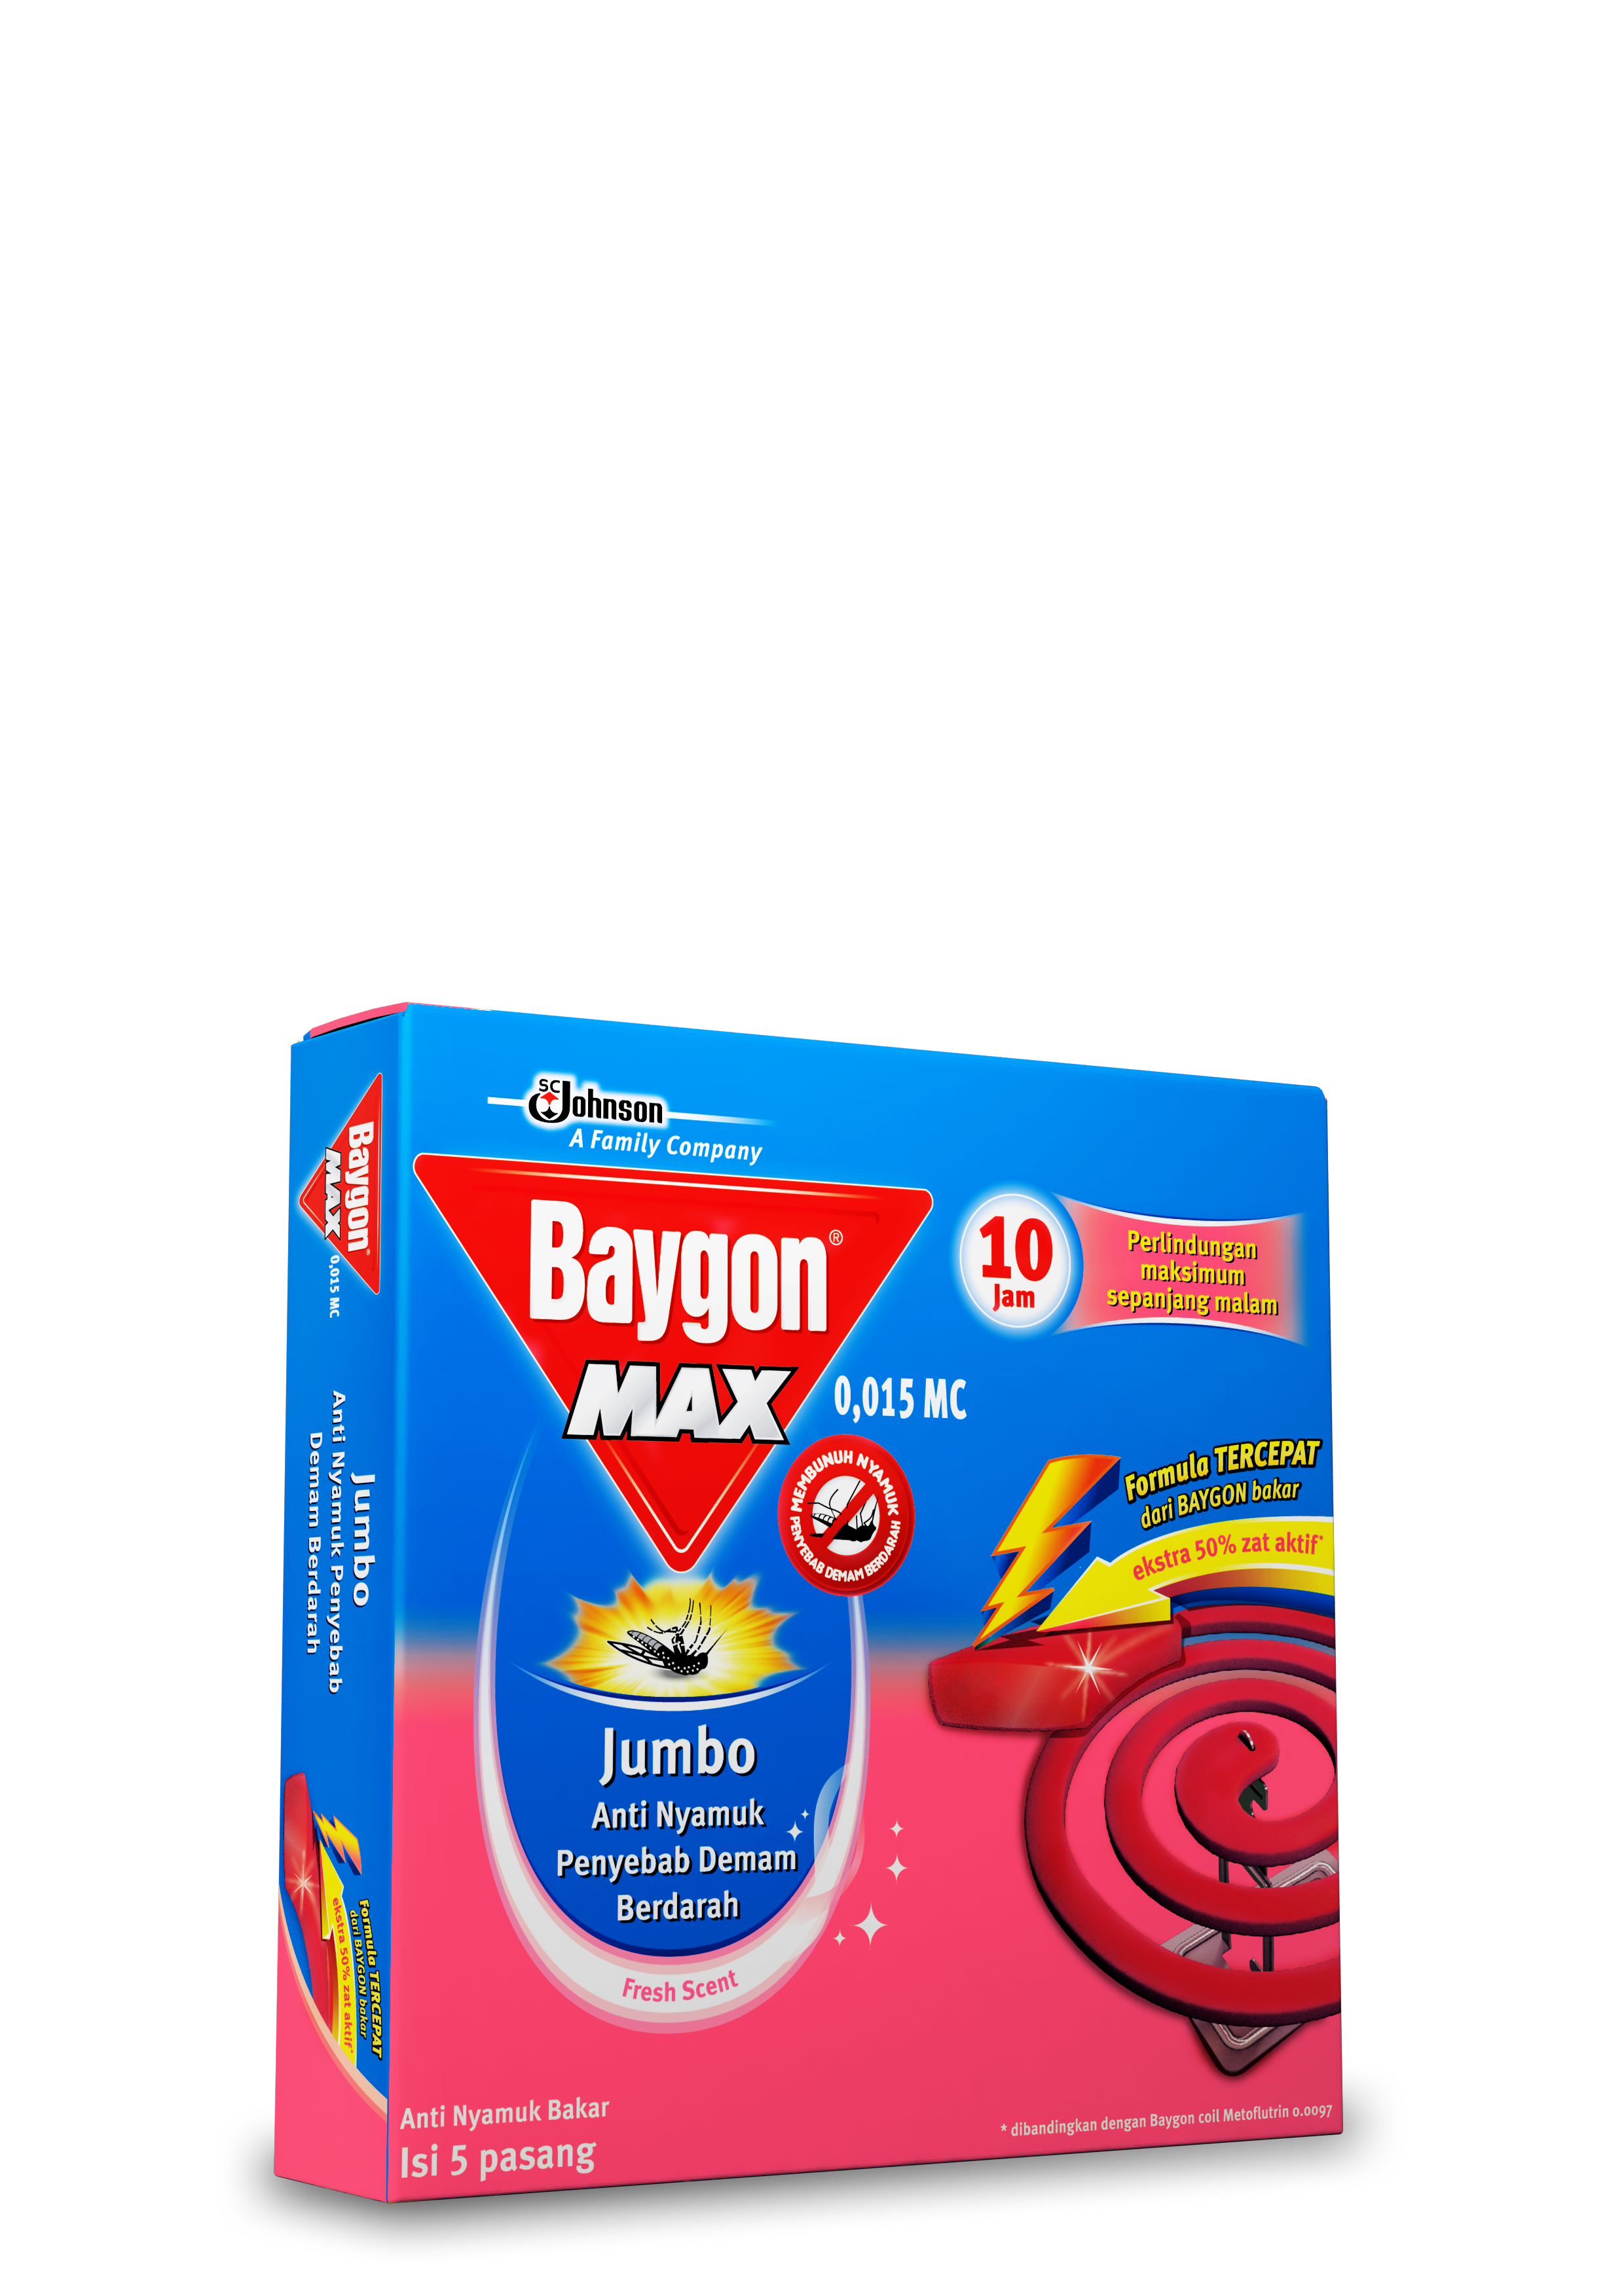 Baygon® MAX Anti Nyamuk Bakar Jumbo Merah Fresh Scent 10 Jam